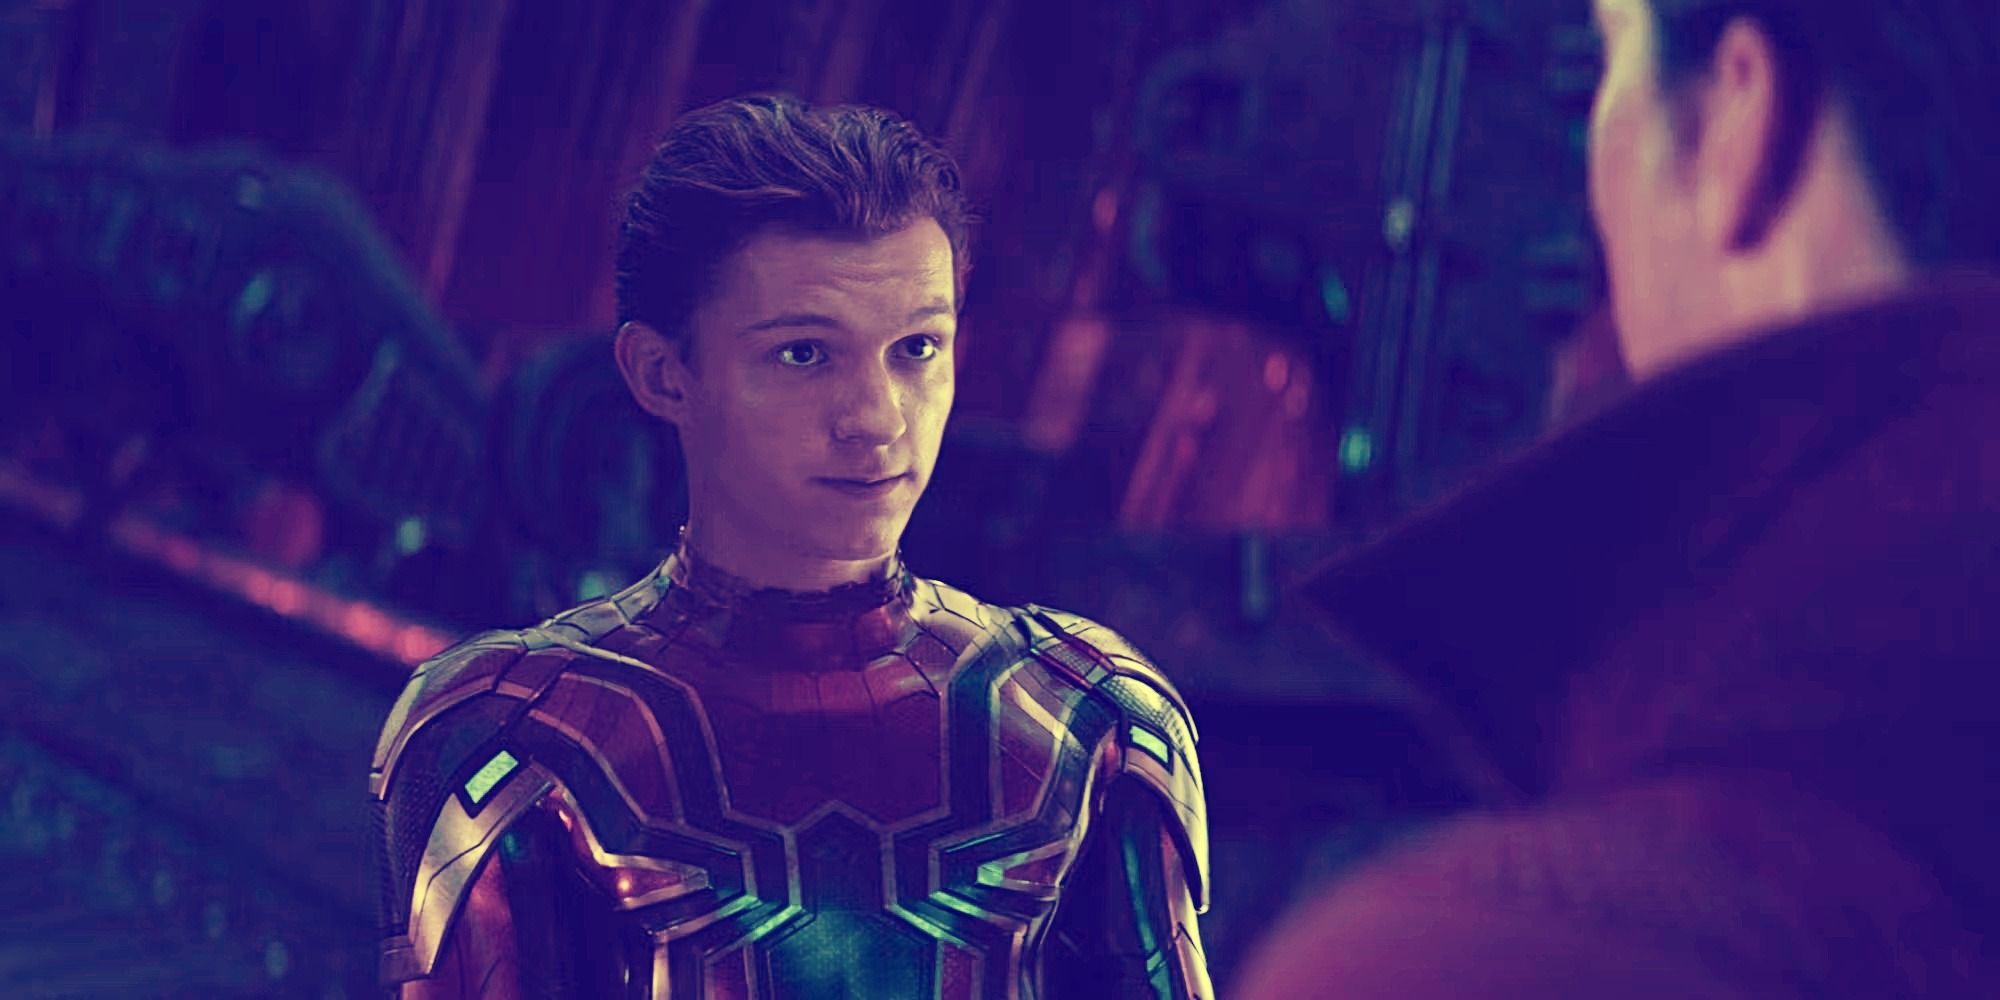 Tom Holland as Spider-Man speaking to Doctor Strange in Avengers: Infinity War